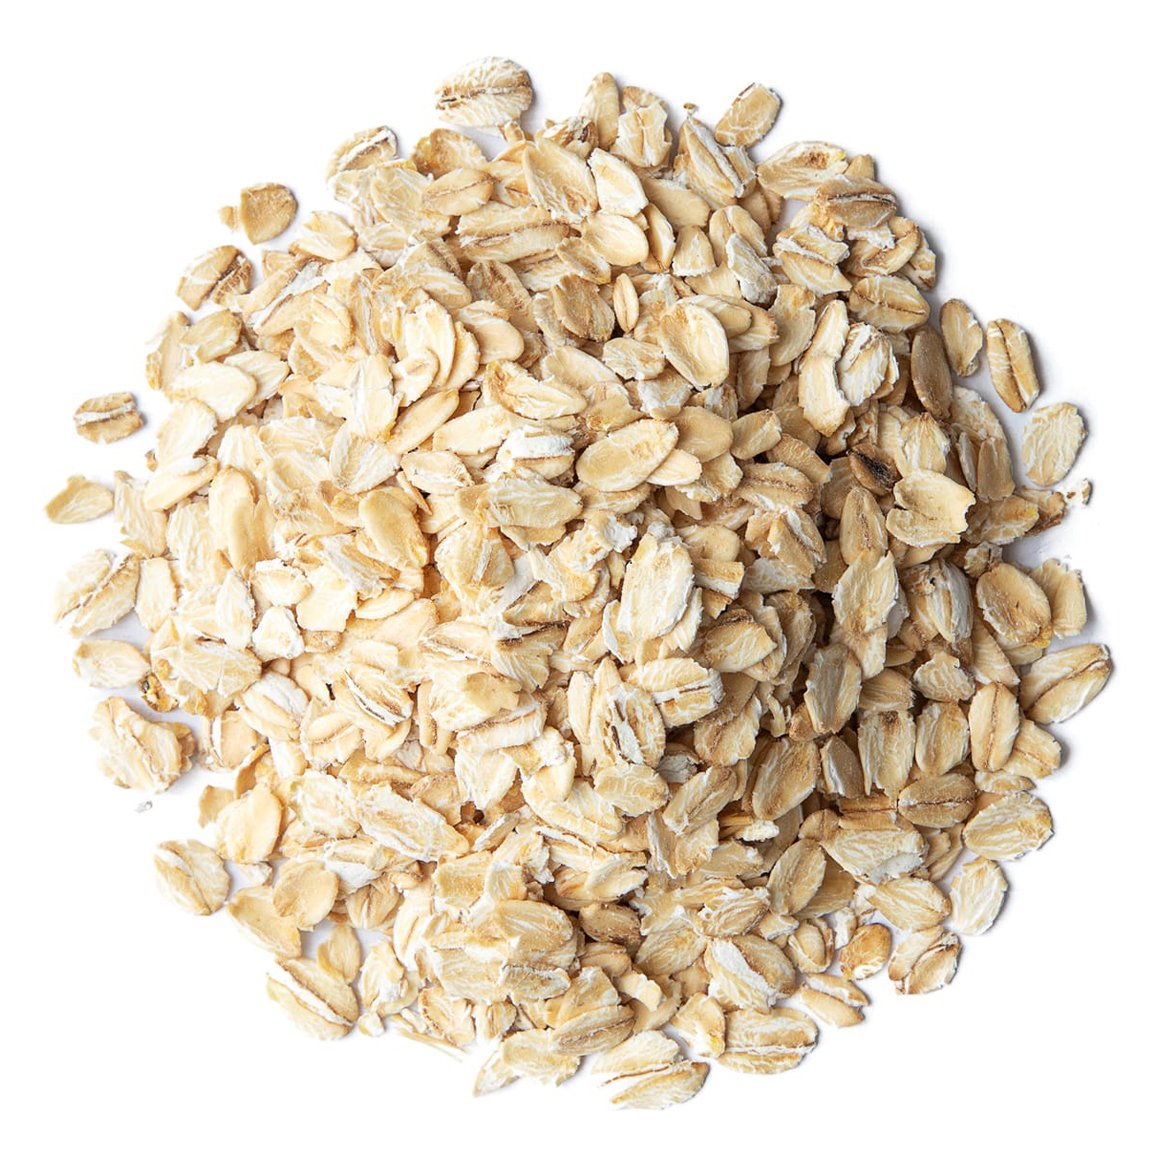 https://foodtolive.com/wp-content/uploads/2022/01/organic-certified-gluten-free-regular-rolled-oats-background-main.jpg